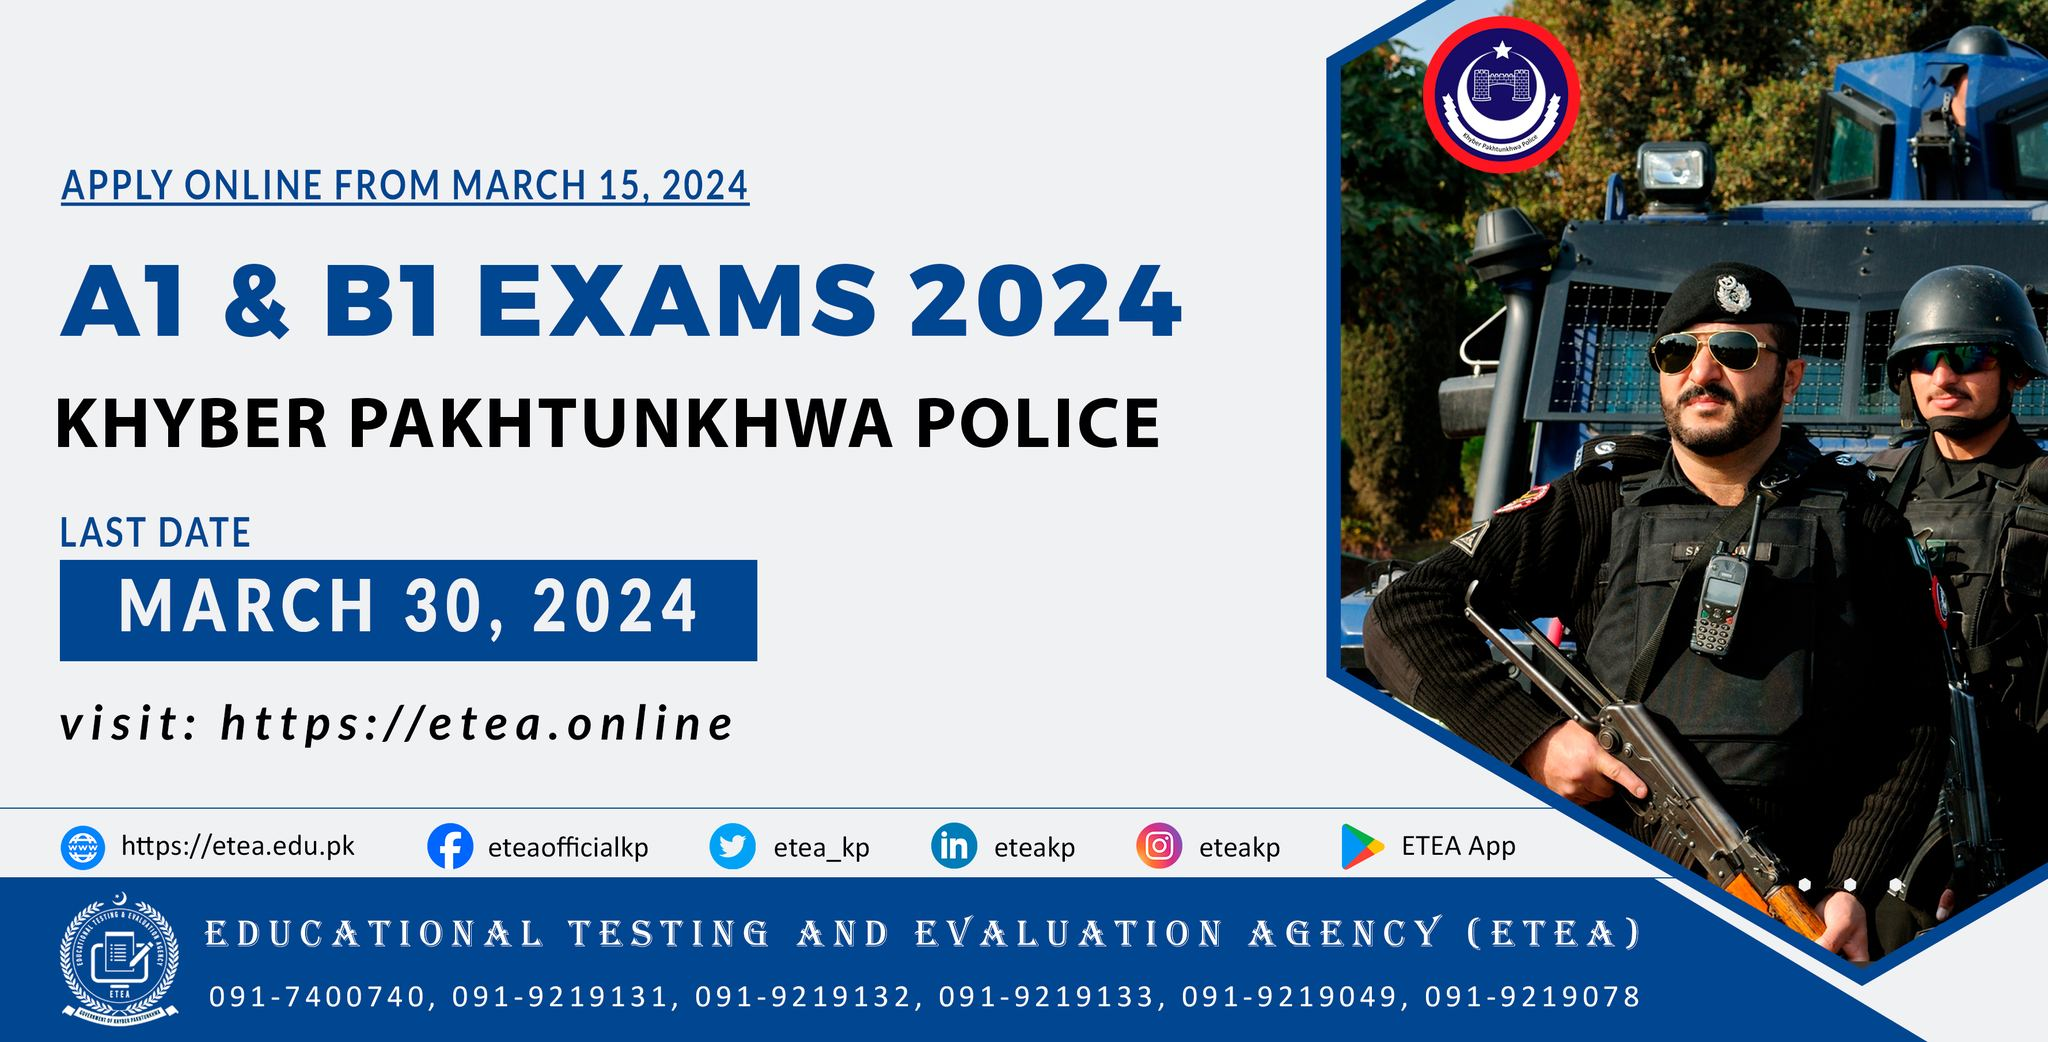 ETEA Police A1 & B1 Exam Registration Online